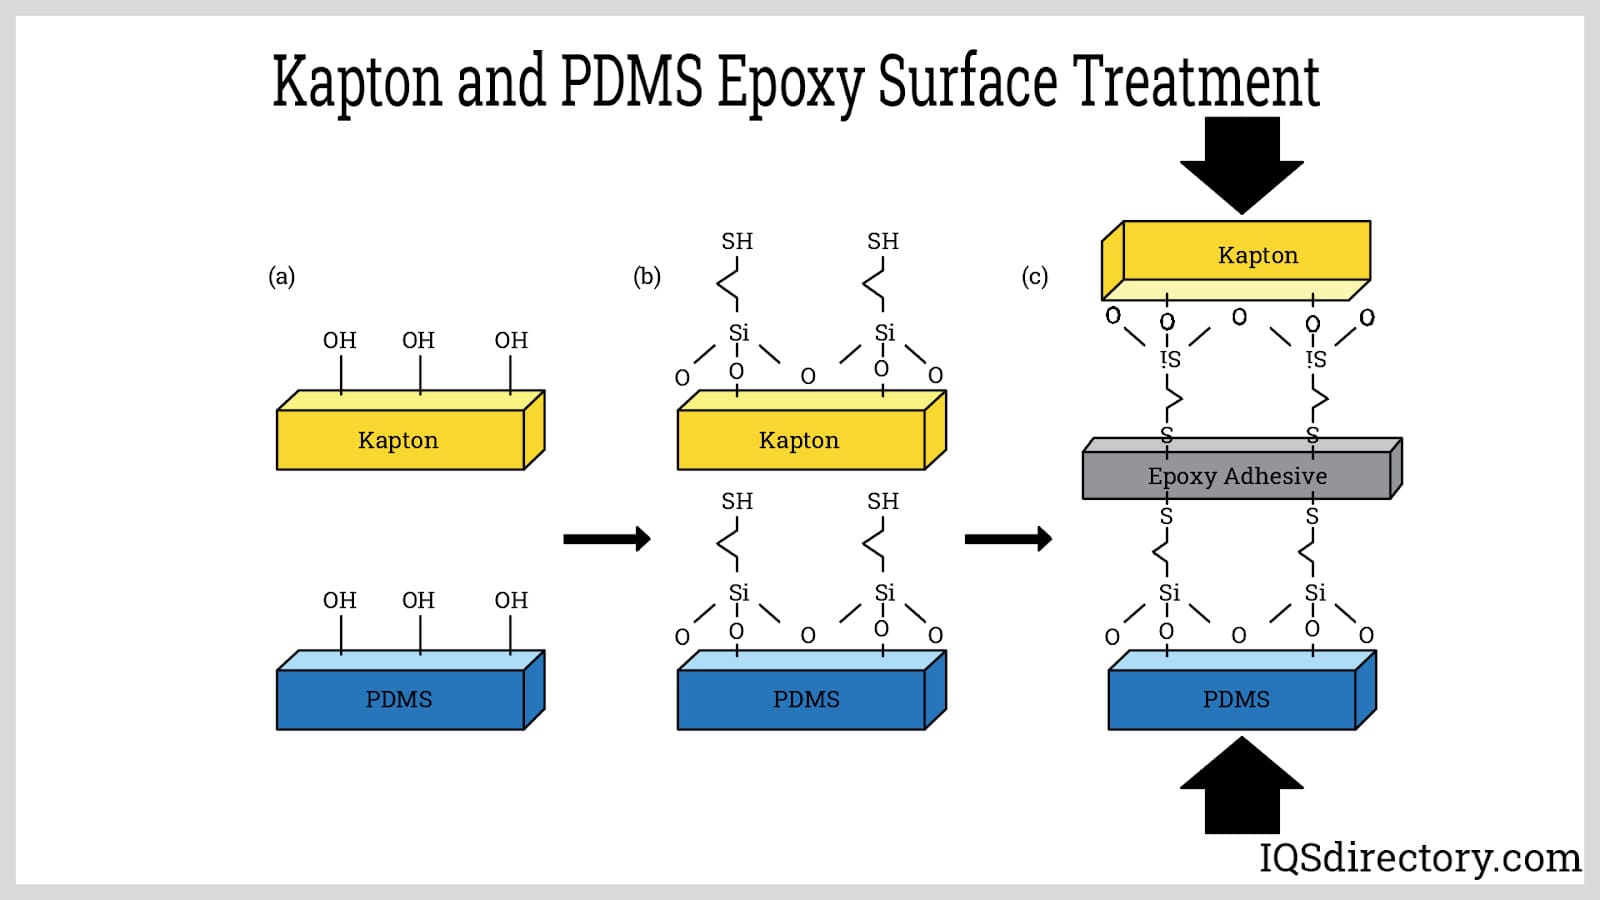 Kapton and PDMS Epoxy Surface Treatment